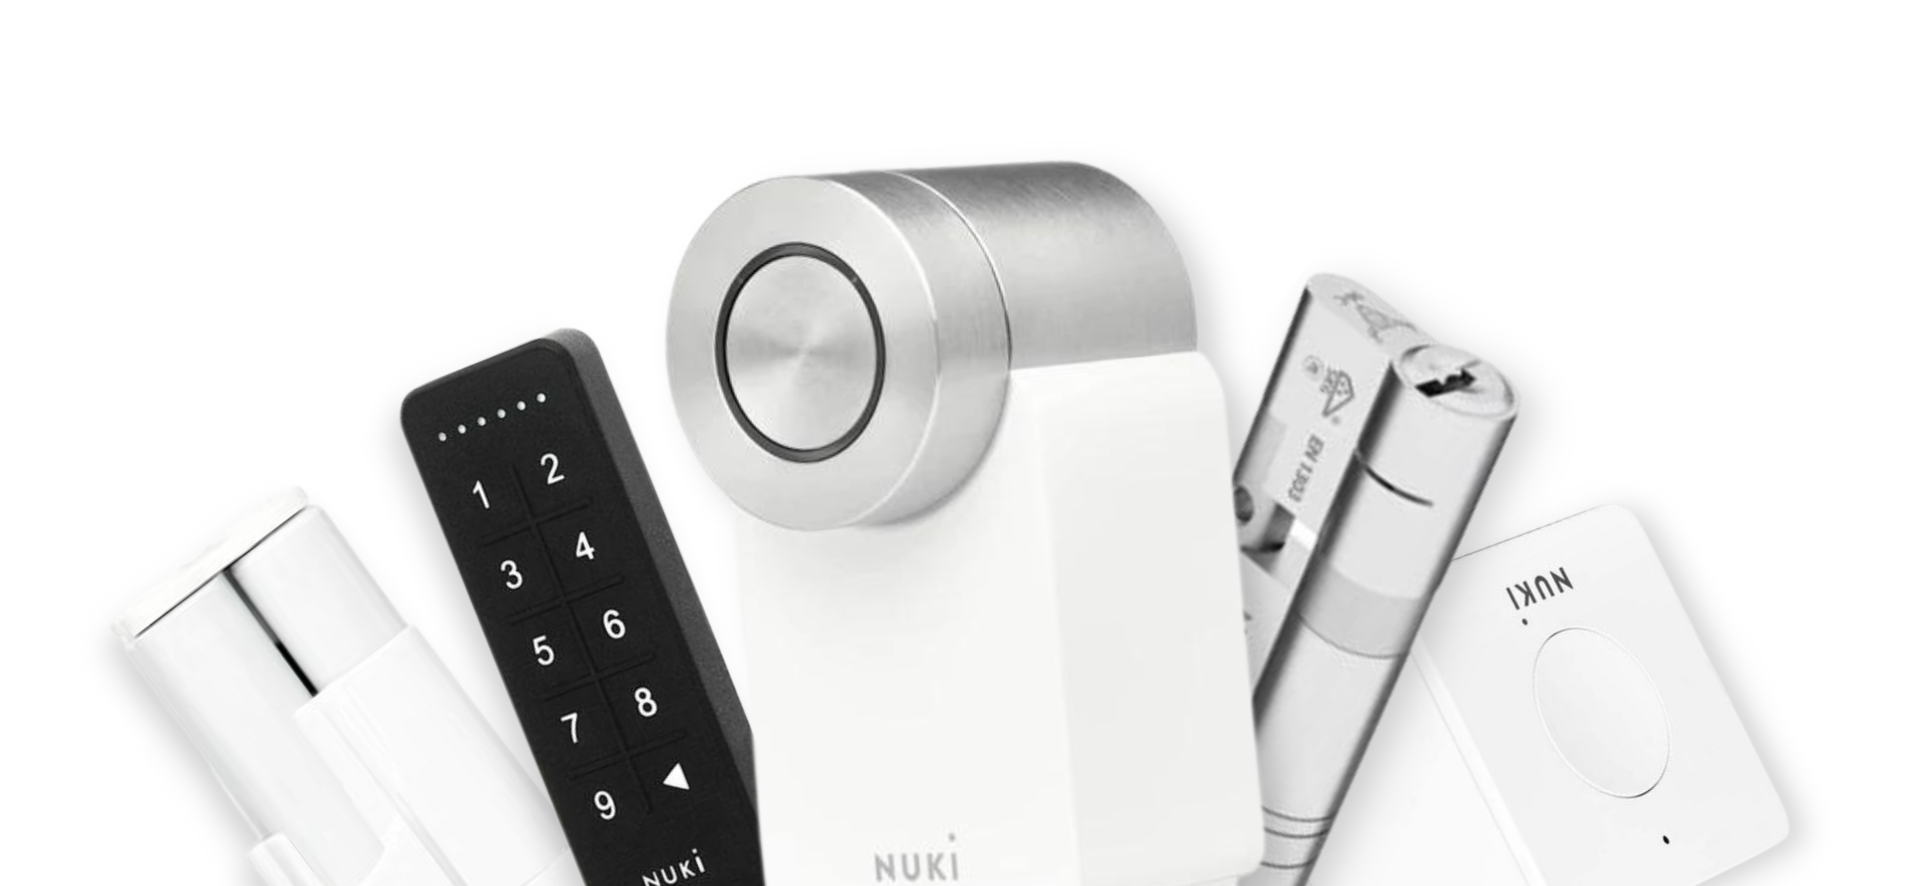 Nuki Smart Lock 4.0 Pro BT/WiFi/Materia/Rosca - Cerradura Inteligente